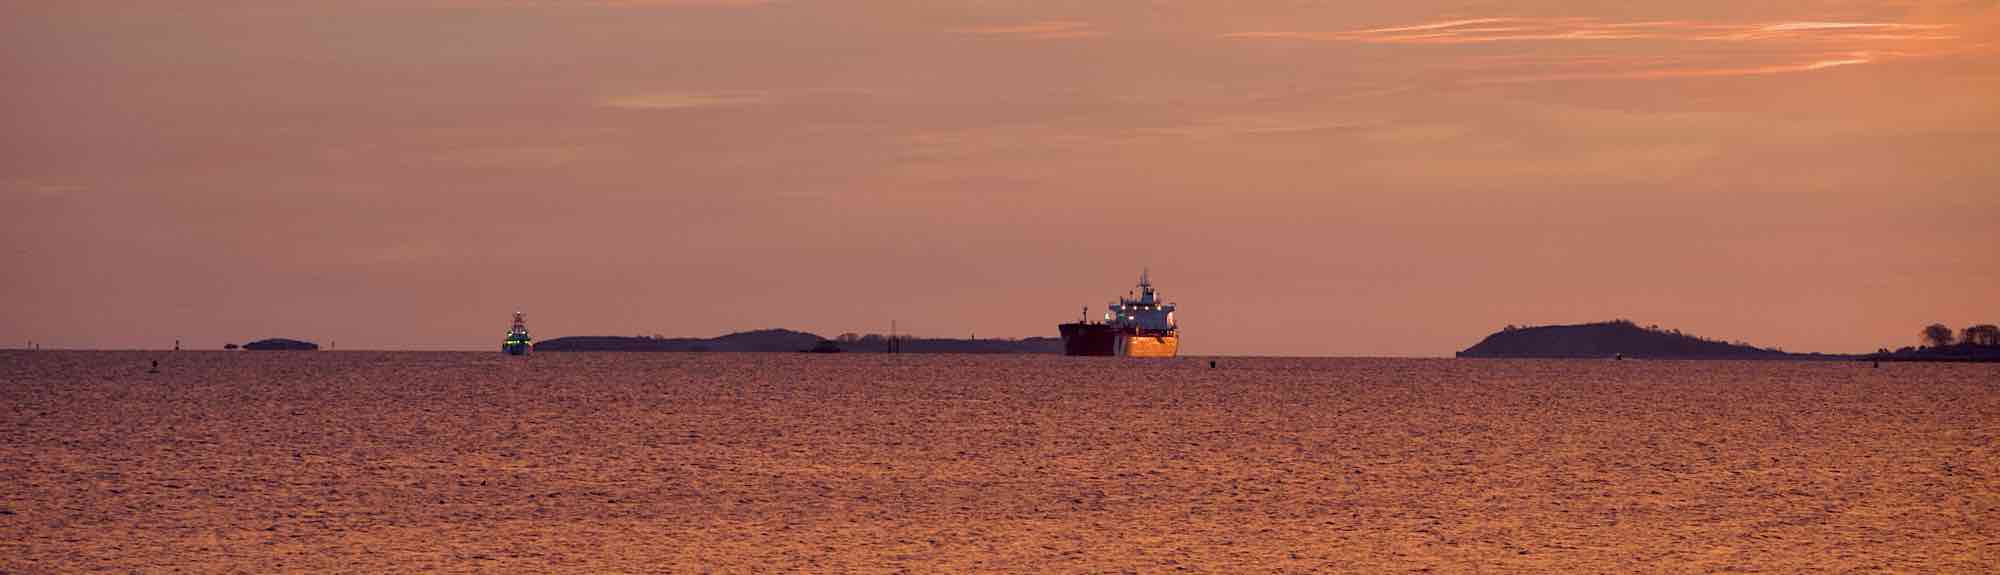 Tanker entering Boston Harbor at dawn